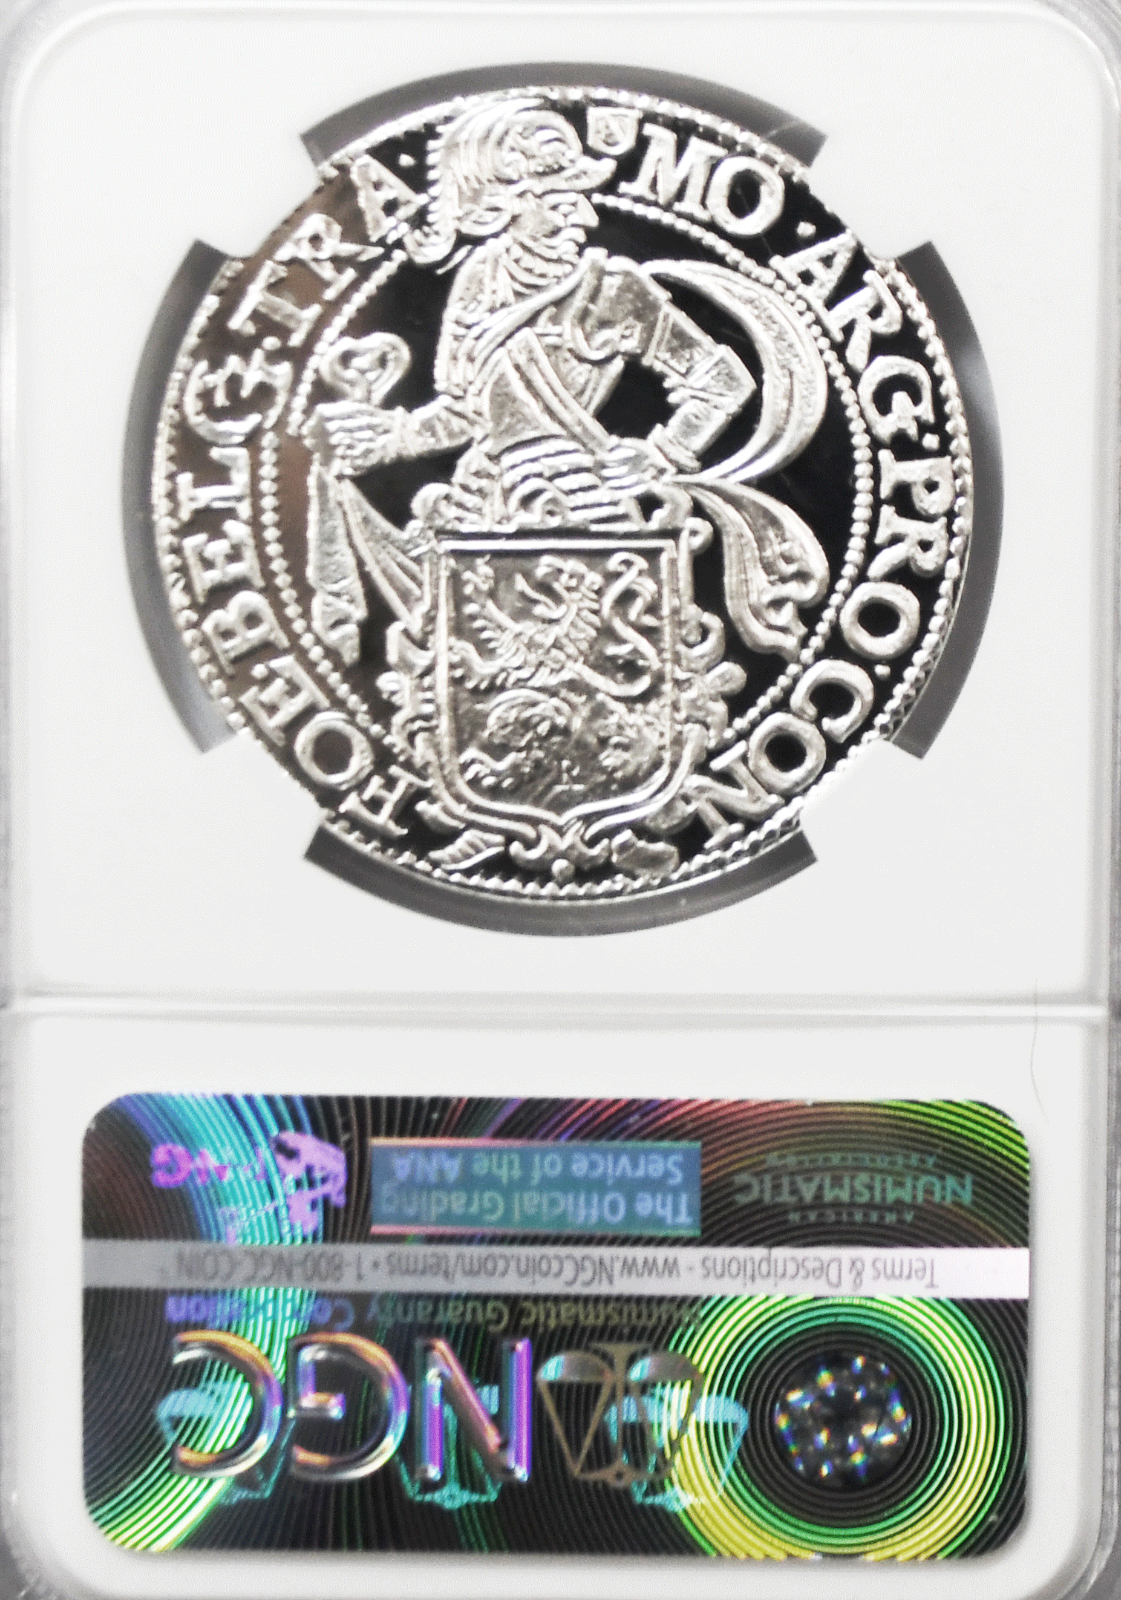 2017 Lion Dollar Royal Dutch Mint 1 oz .9999 Silver NGC PF 70 Ultra Cameo